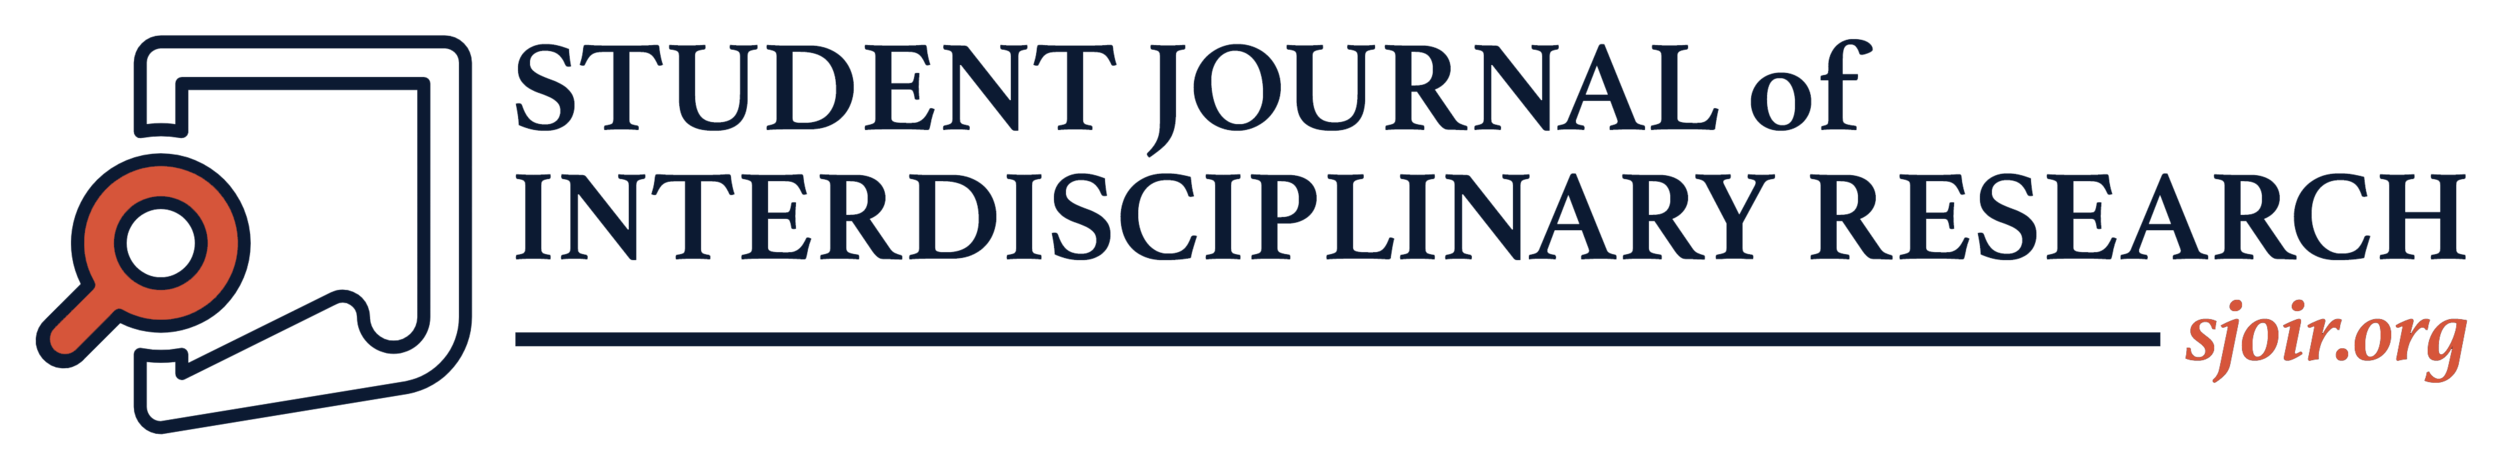 Student Journal of Interdisciplinary Research